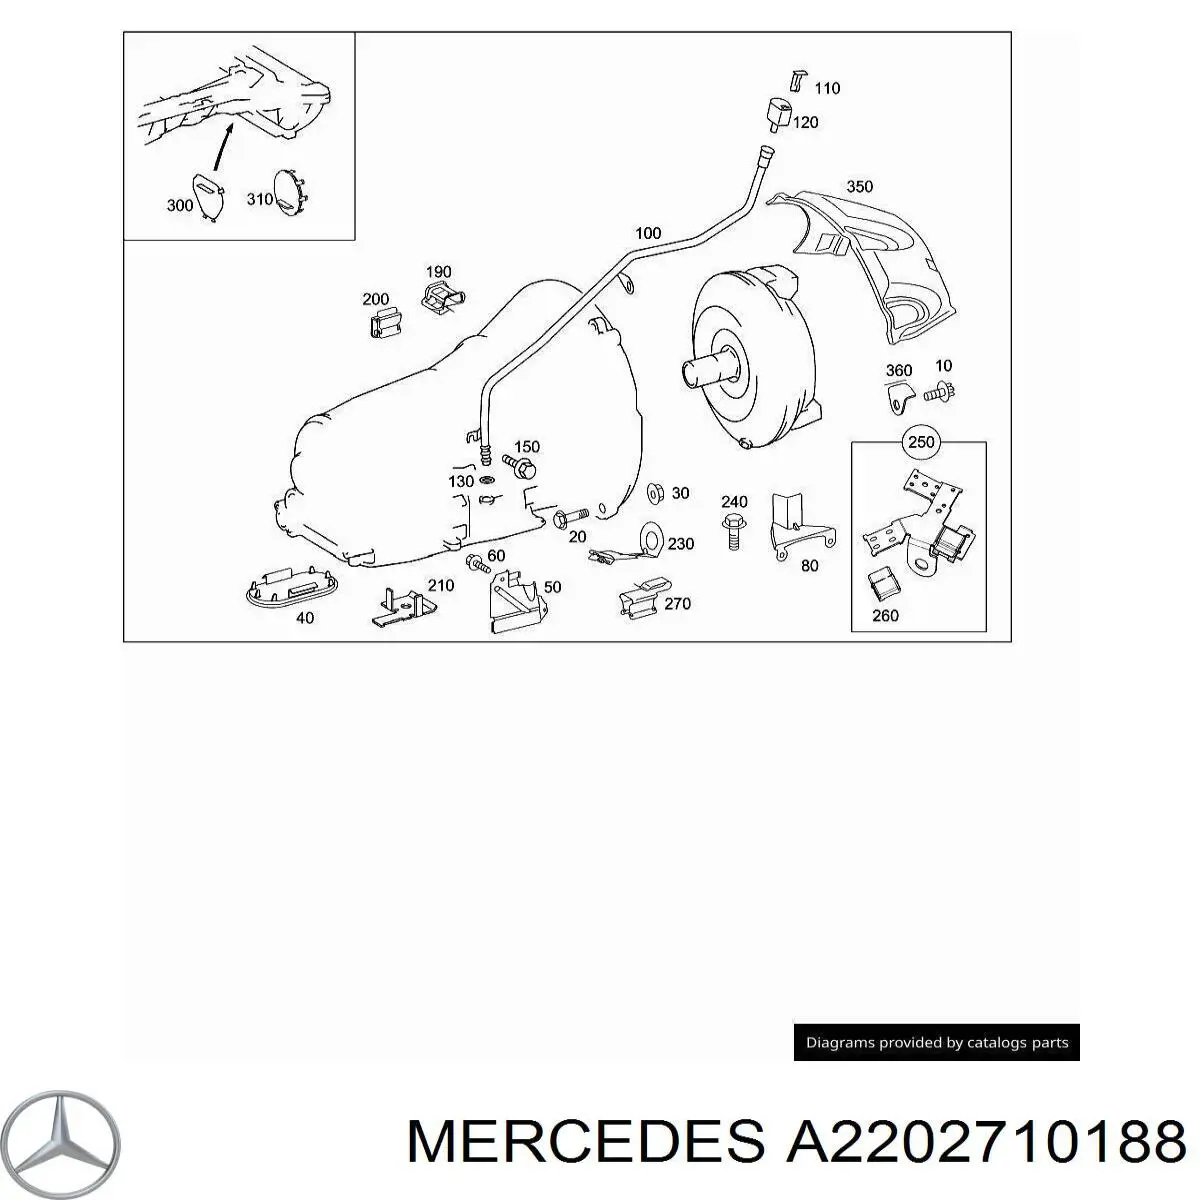 A2202710188 Mercedes